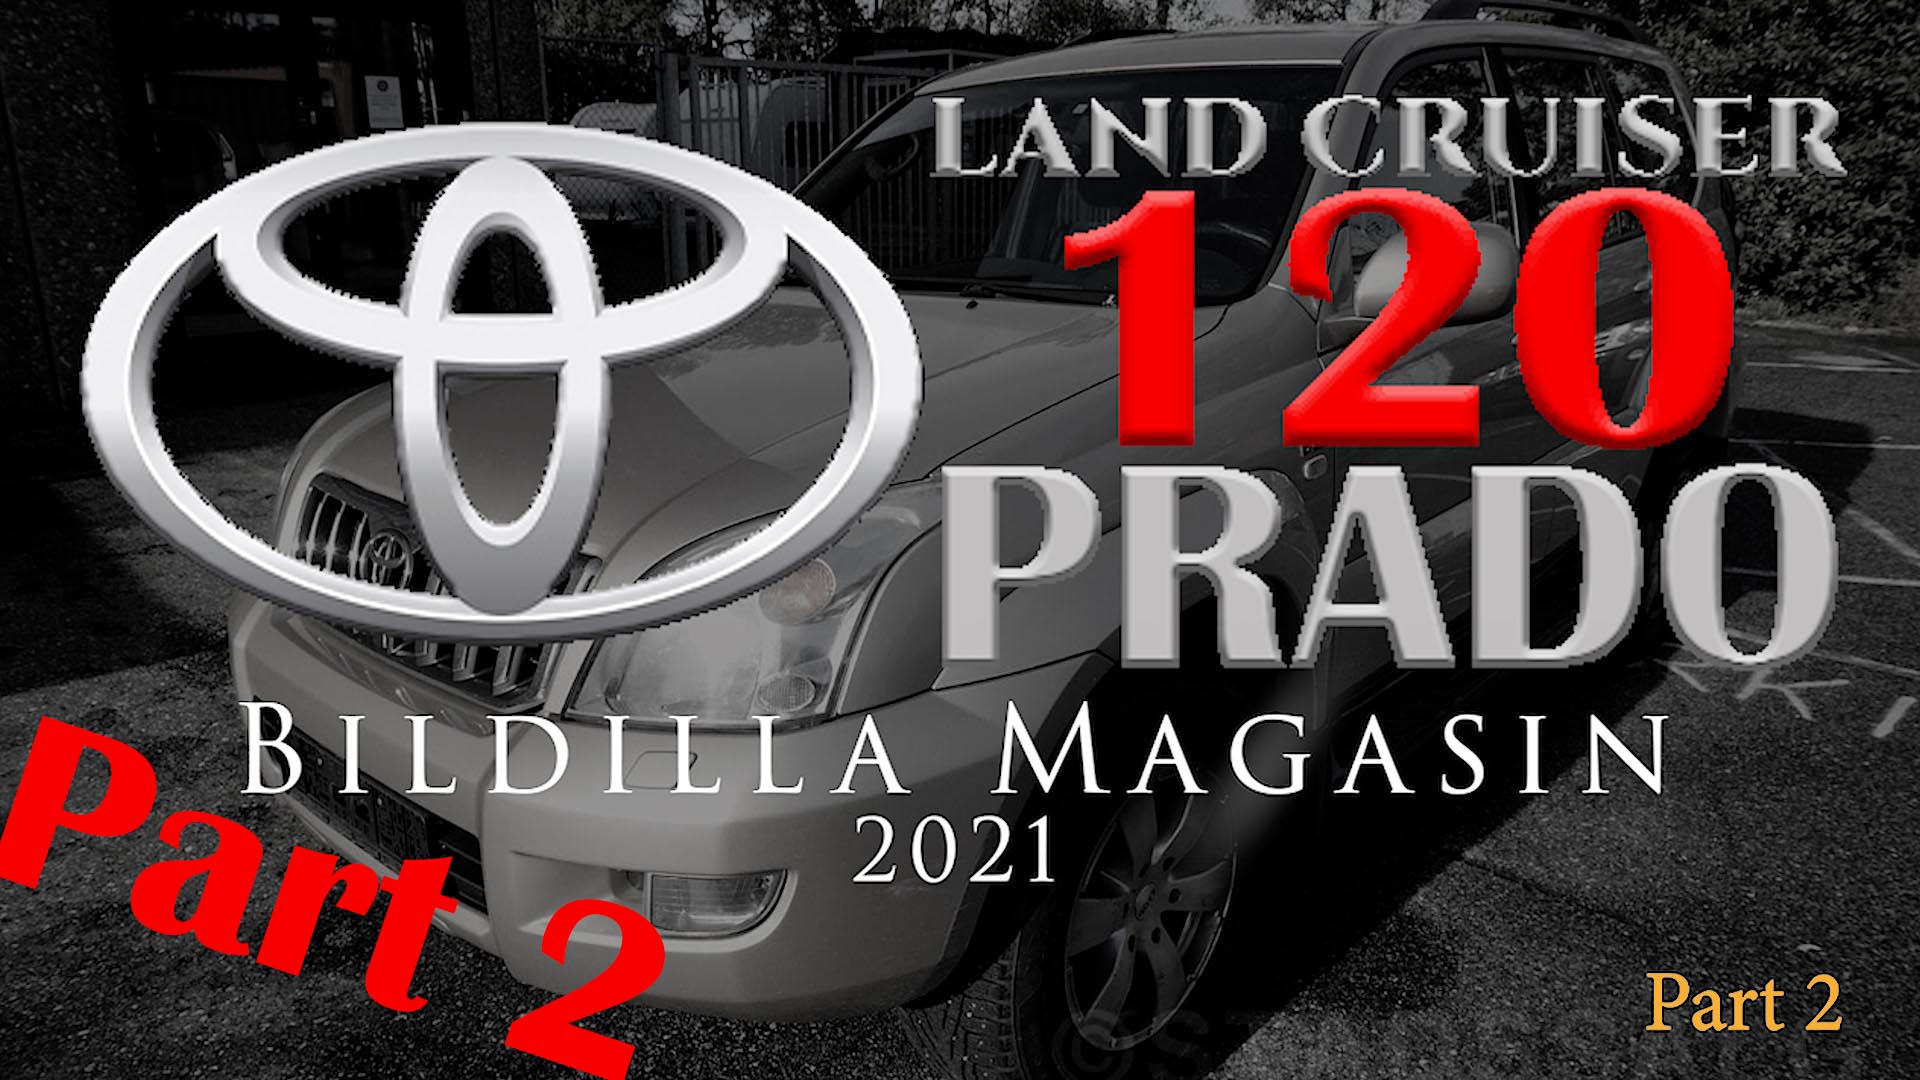 Toyota Land Cruiser / PRADO 120 information and setup, part 2